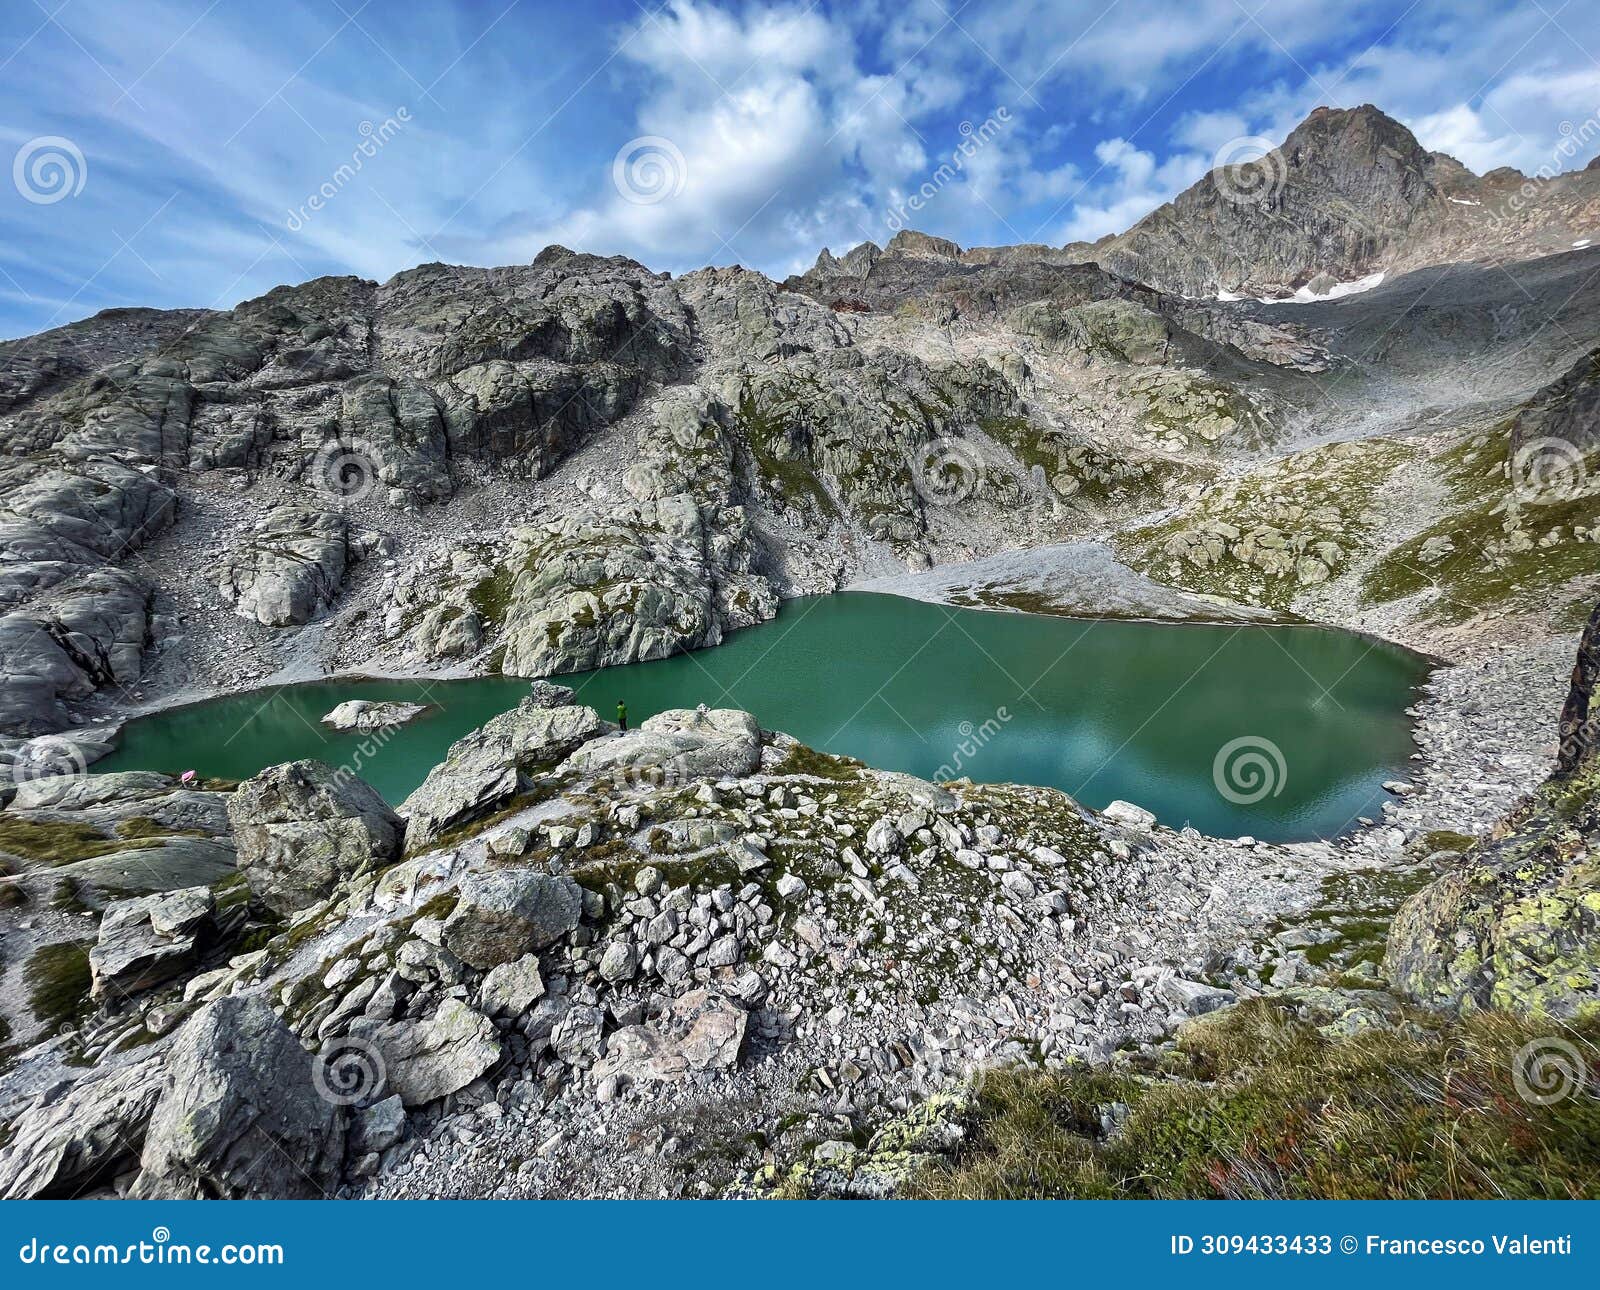 alpine oasis: mountain trail by lac blanc in grand balcon, chamonix, france